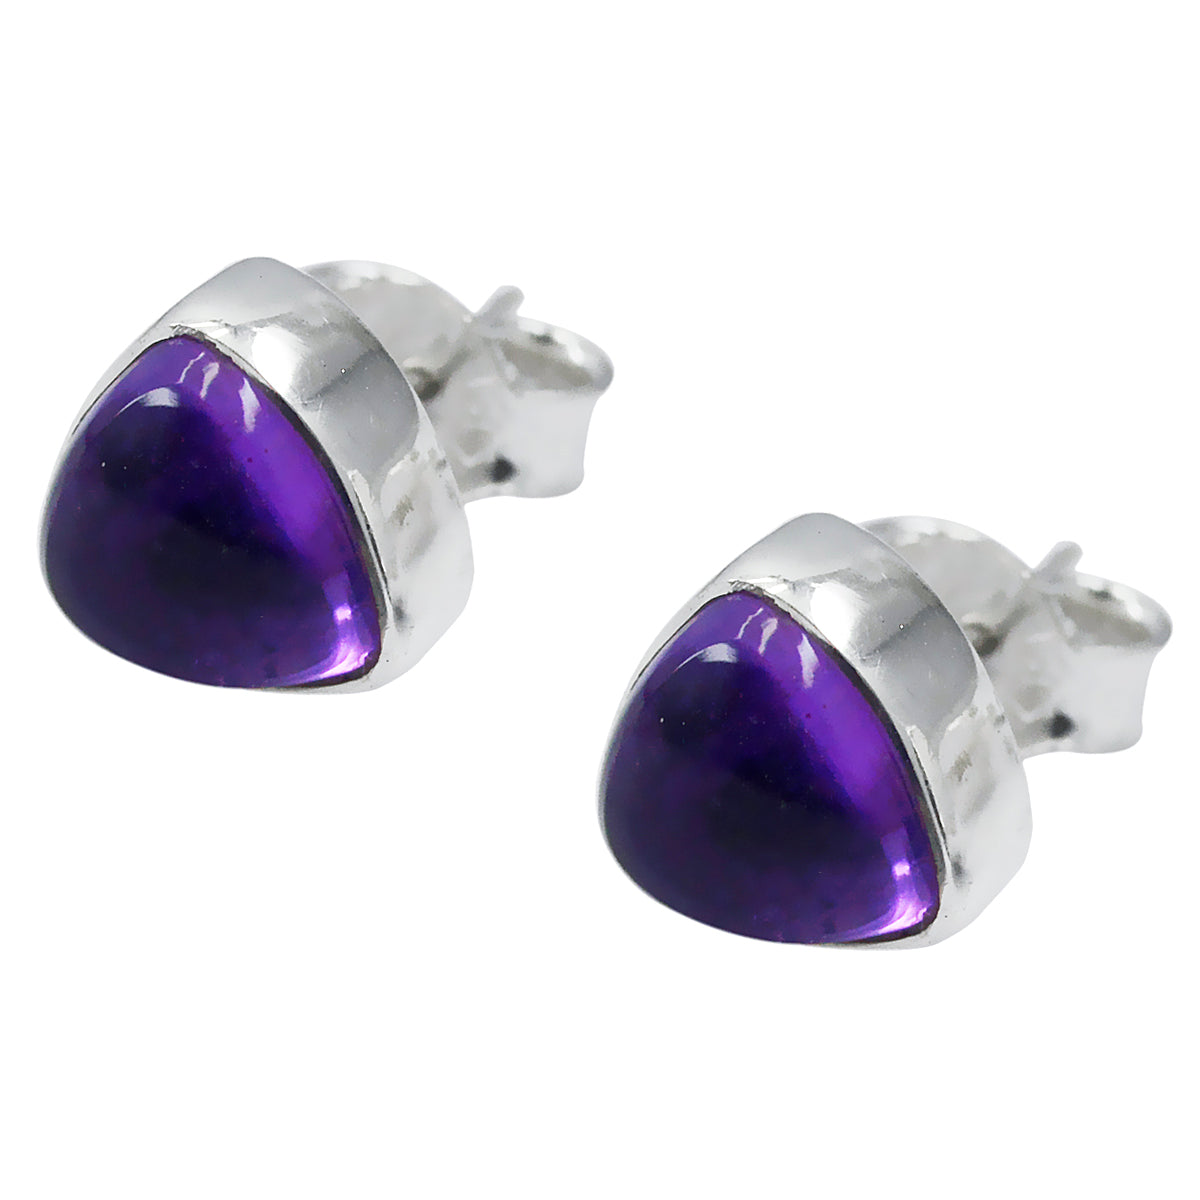 Riyo Good Gemstones trillion Cabochon Purple Amethyst Silver Earring gift for mother's day